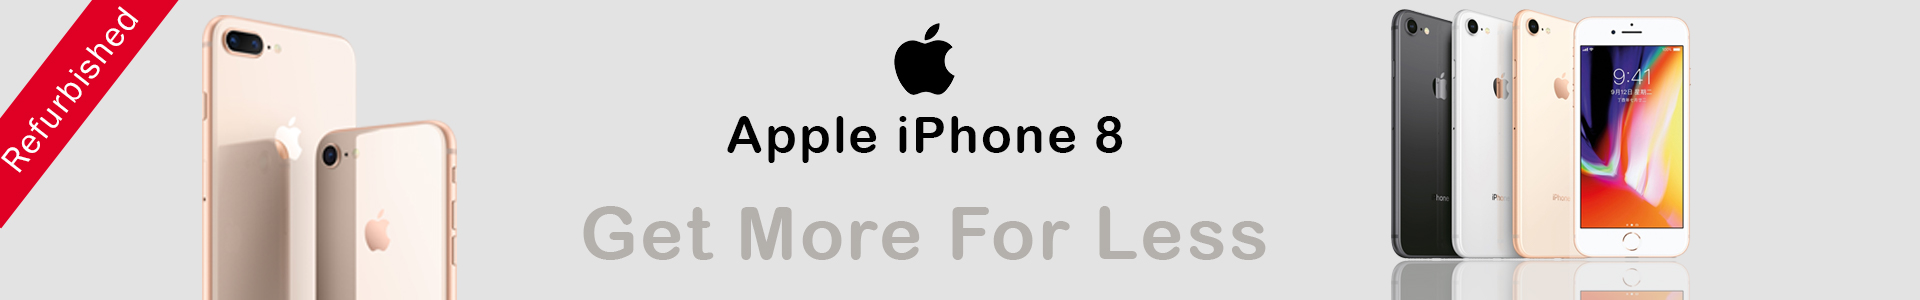 iphone 8 refurbished